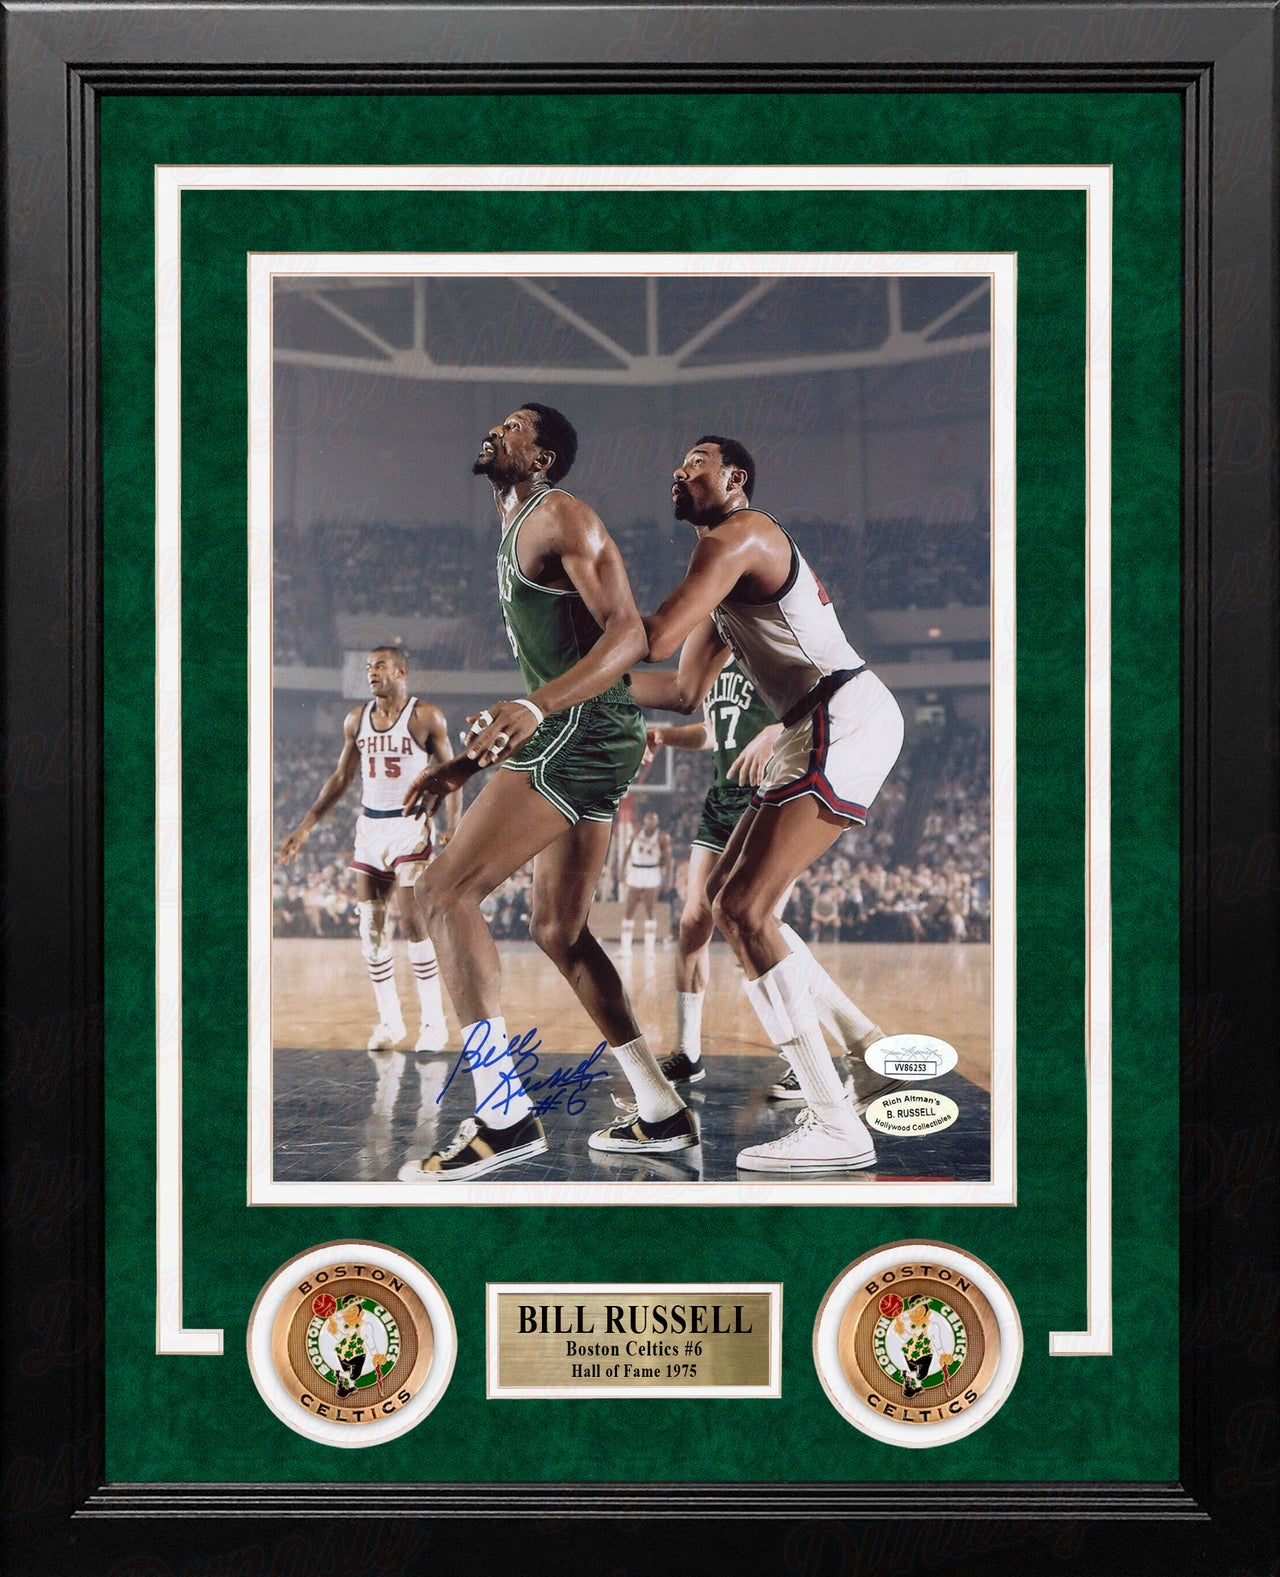 Bill Russell v. Chamberlain Boston Celtics Autographed 8" x 10" Framed Basketball Photo - Dynasty Sports & Framing 